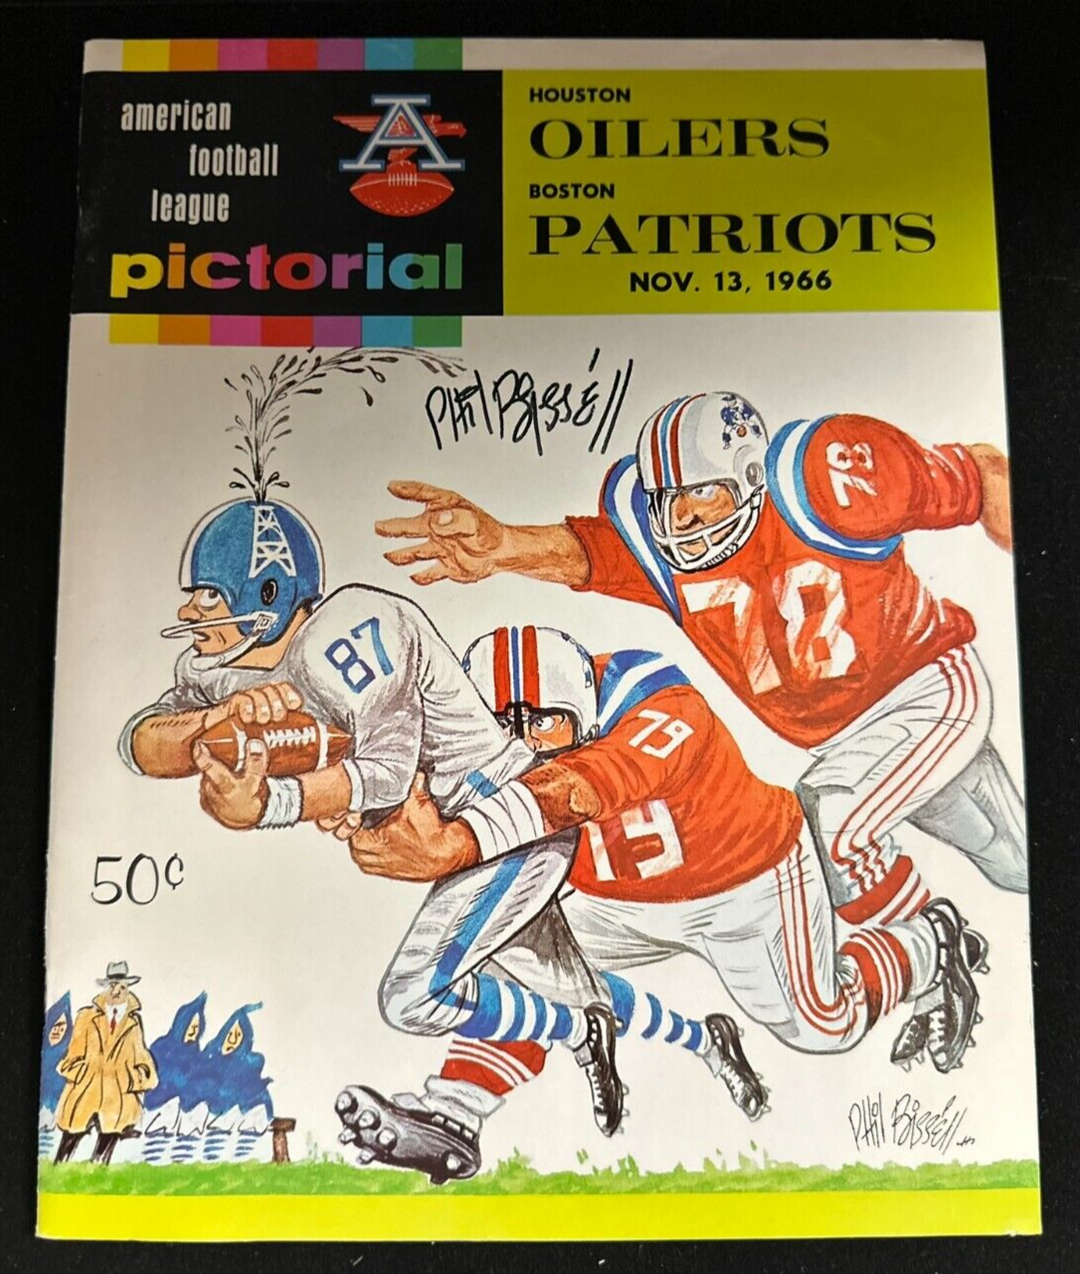 Phil Bissell Autographed Nov 13, 1966 Boston Patriots Vs Oilers Program AFL